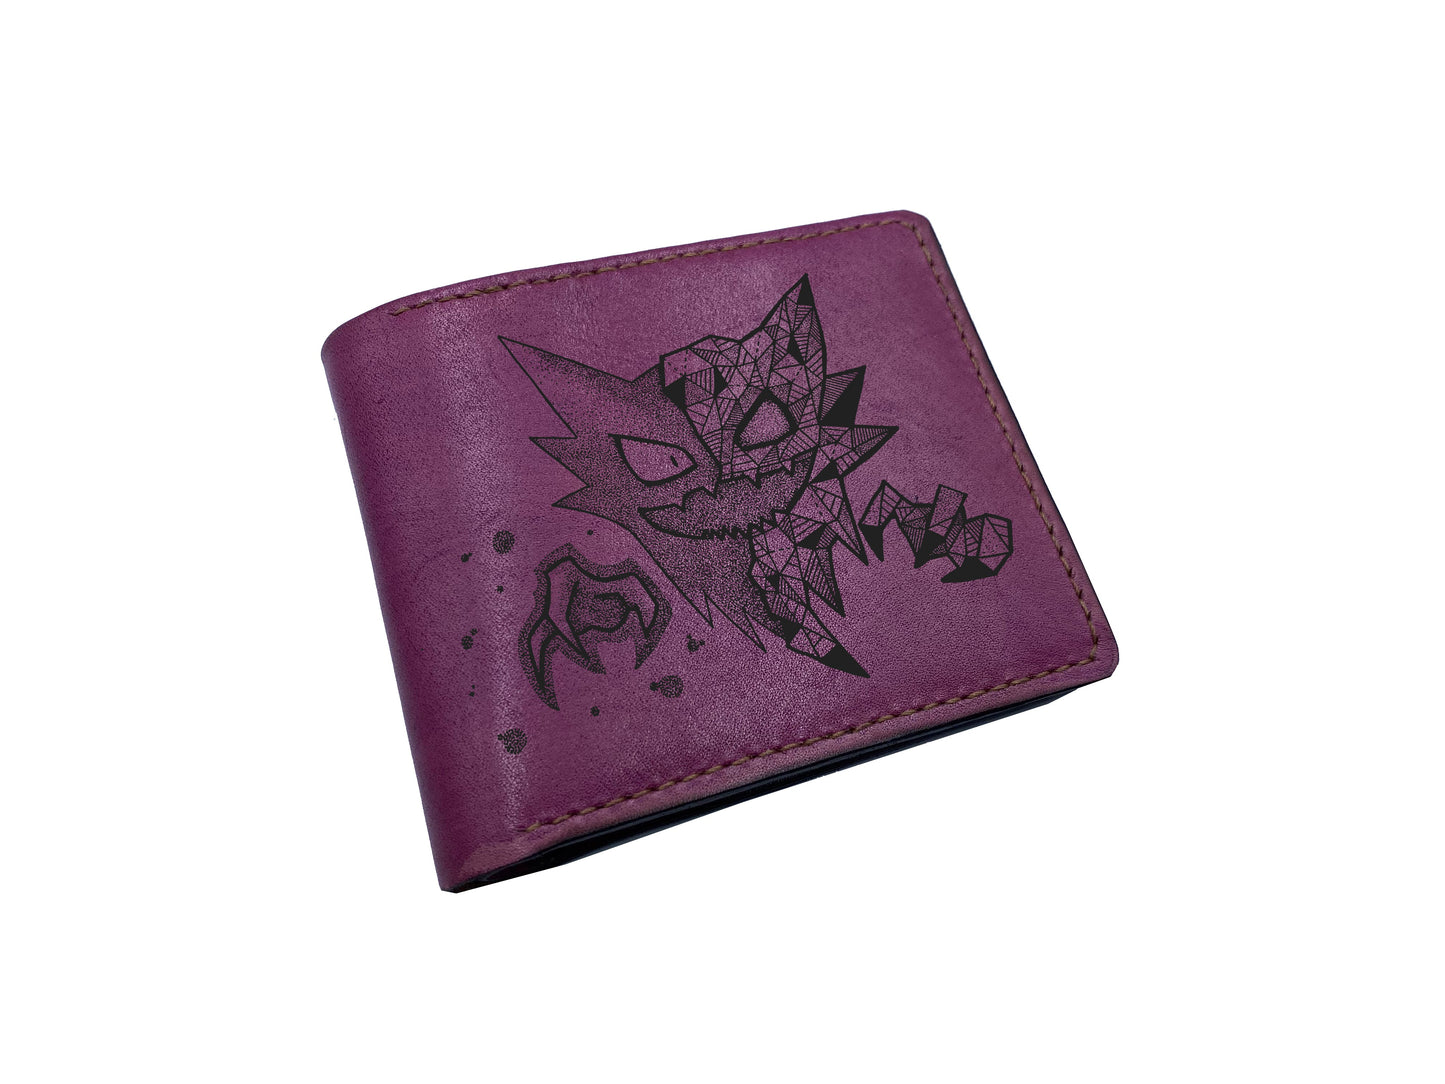 Mayan Corner - Pokemon geometric art leather wallet, customized leather gift for men, pokemon gift ideas -  Flareon PK27107